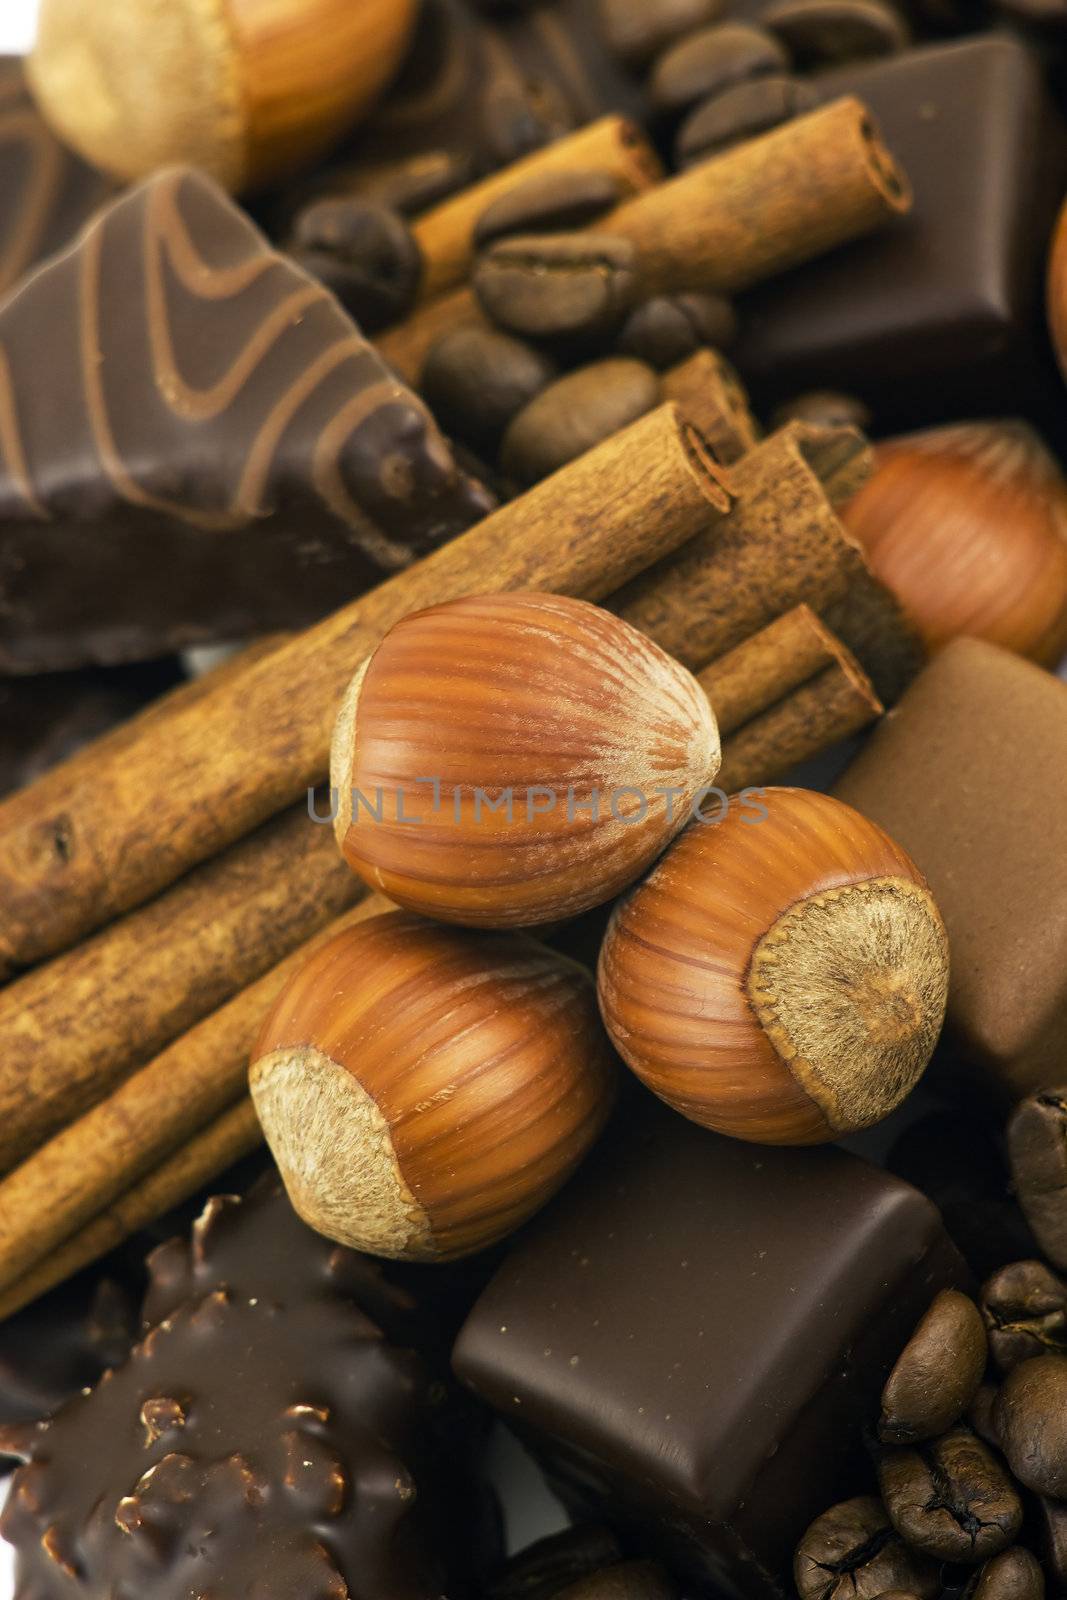 chocolate, cinnamon, nuts, coffee beans by miradrozdowski